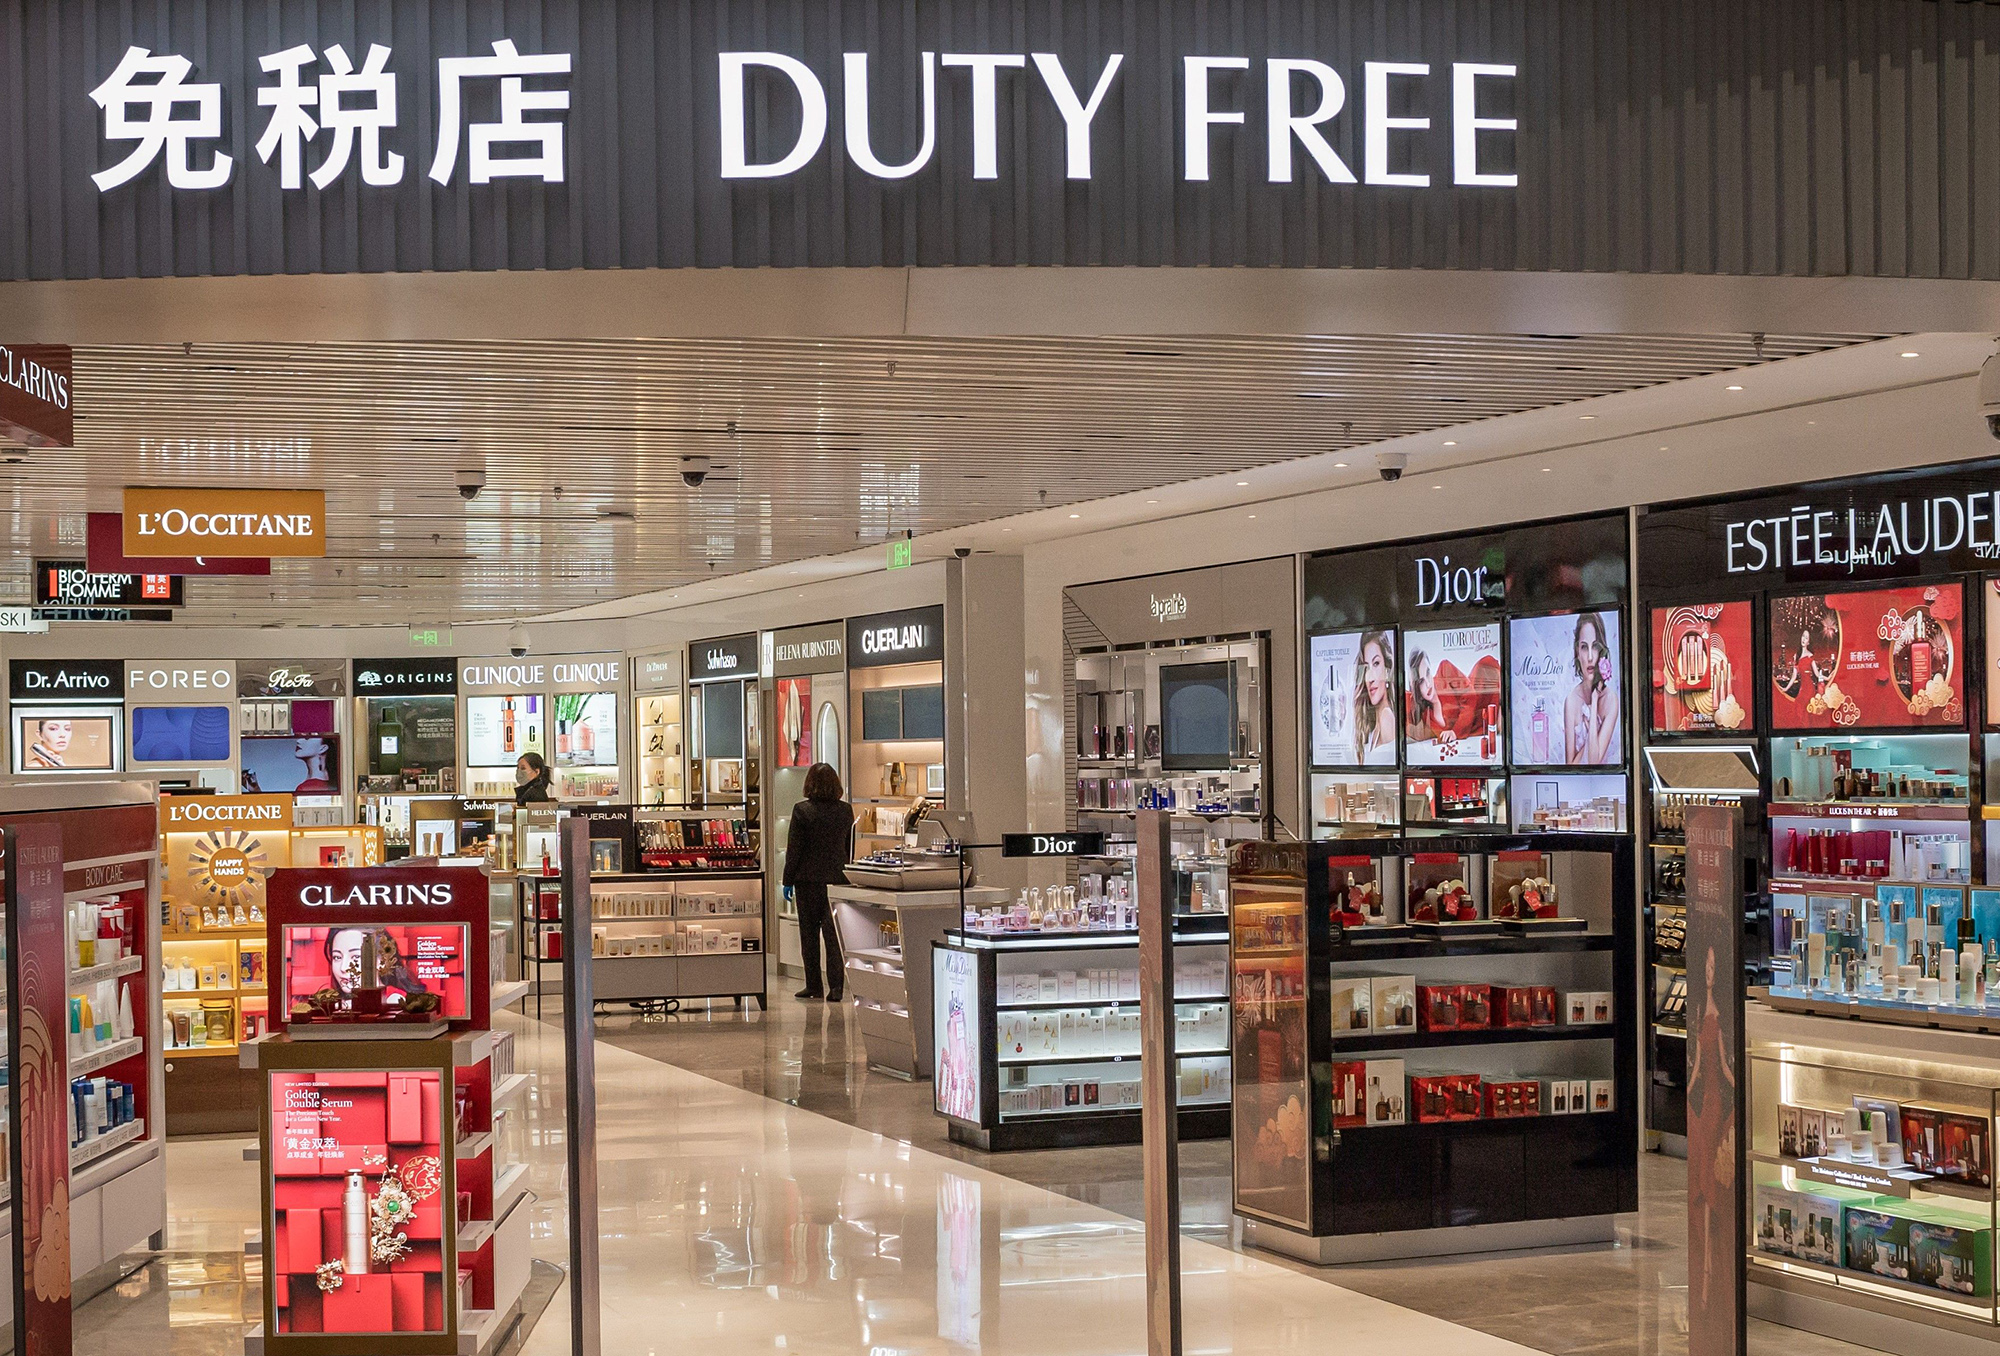 CTG Duty Free Raises $2.1 Billion in Hong Kong Listing - Bloomberg